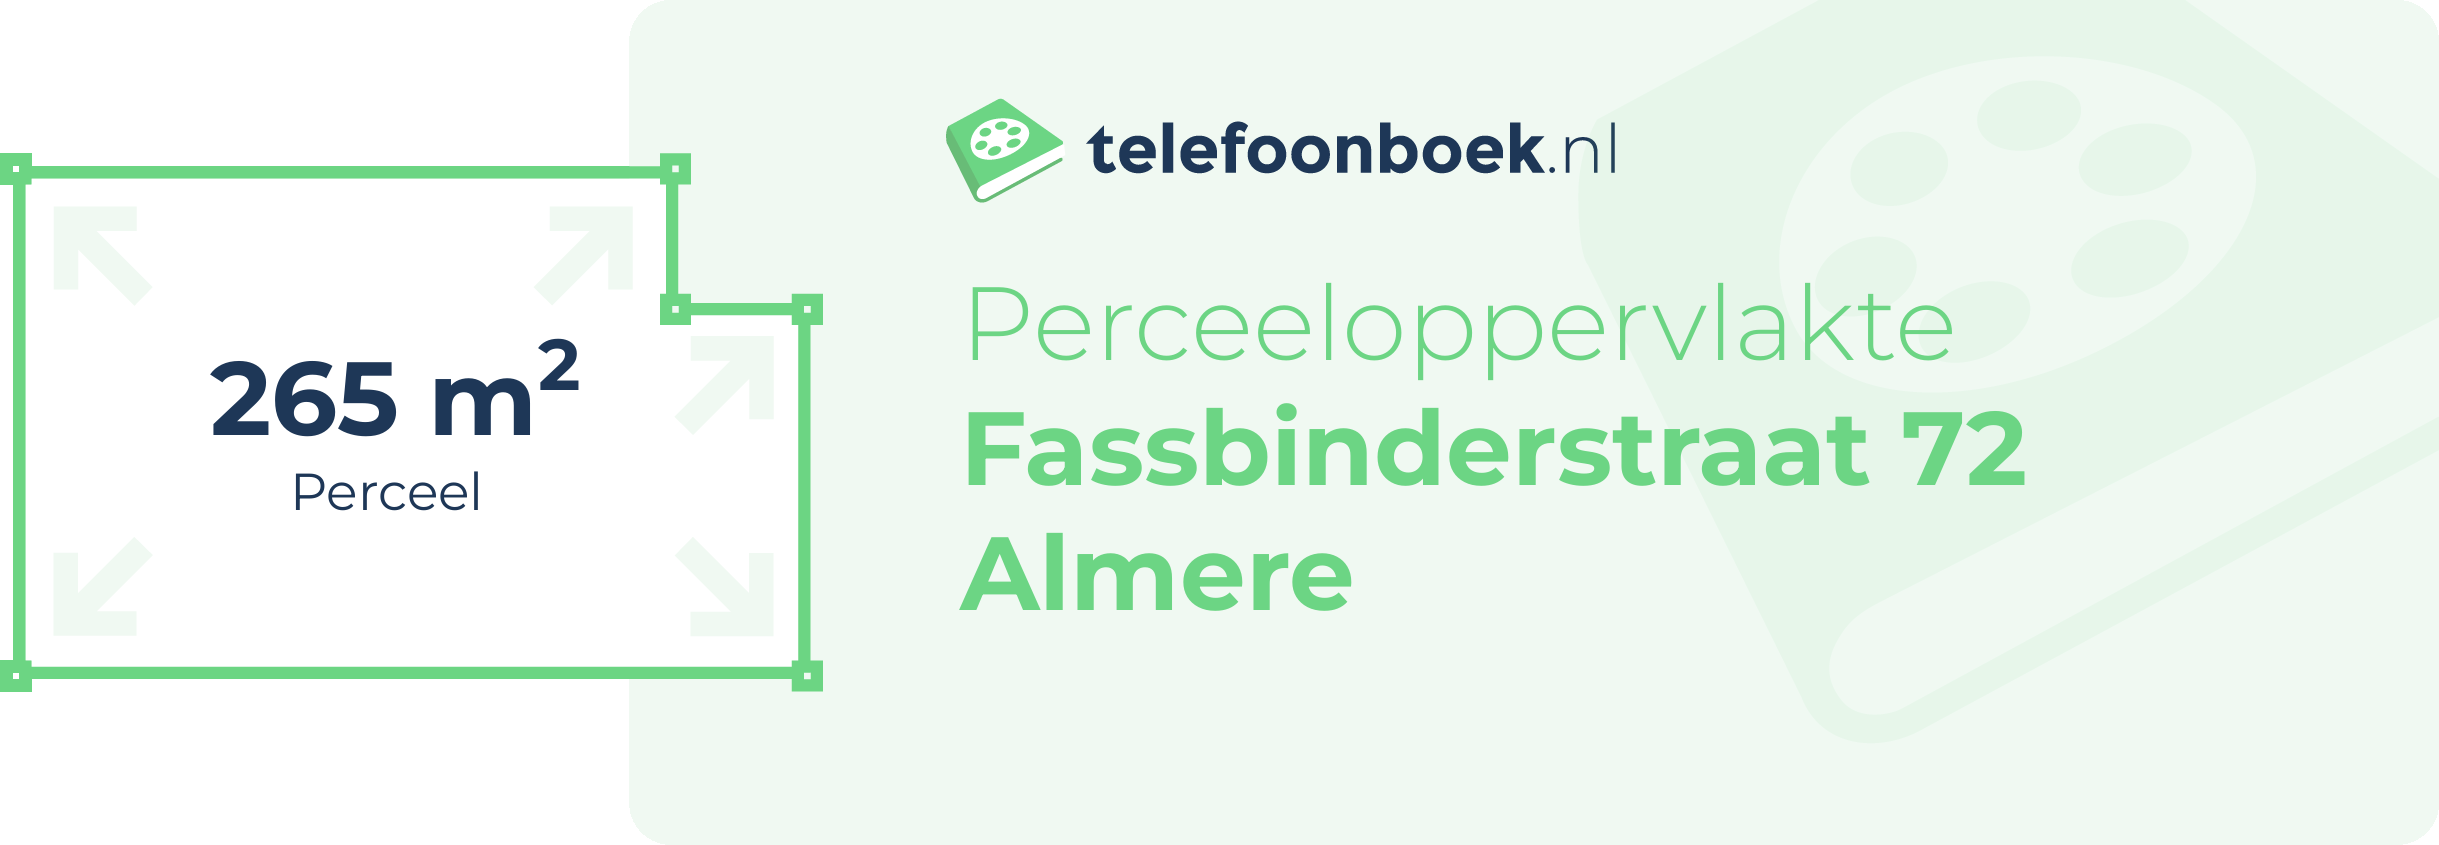 Perceeloppervlakte Fassbinderstraat 72 Almere